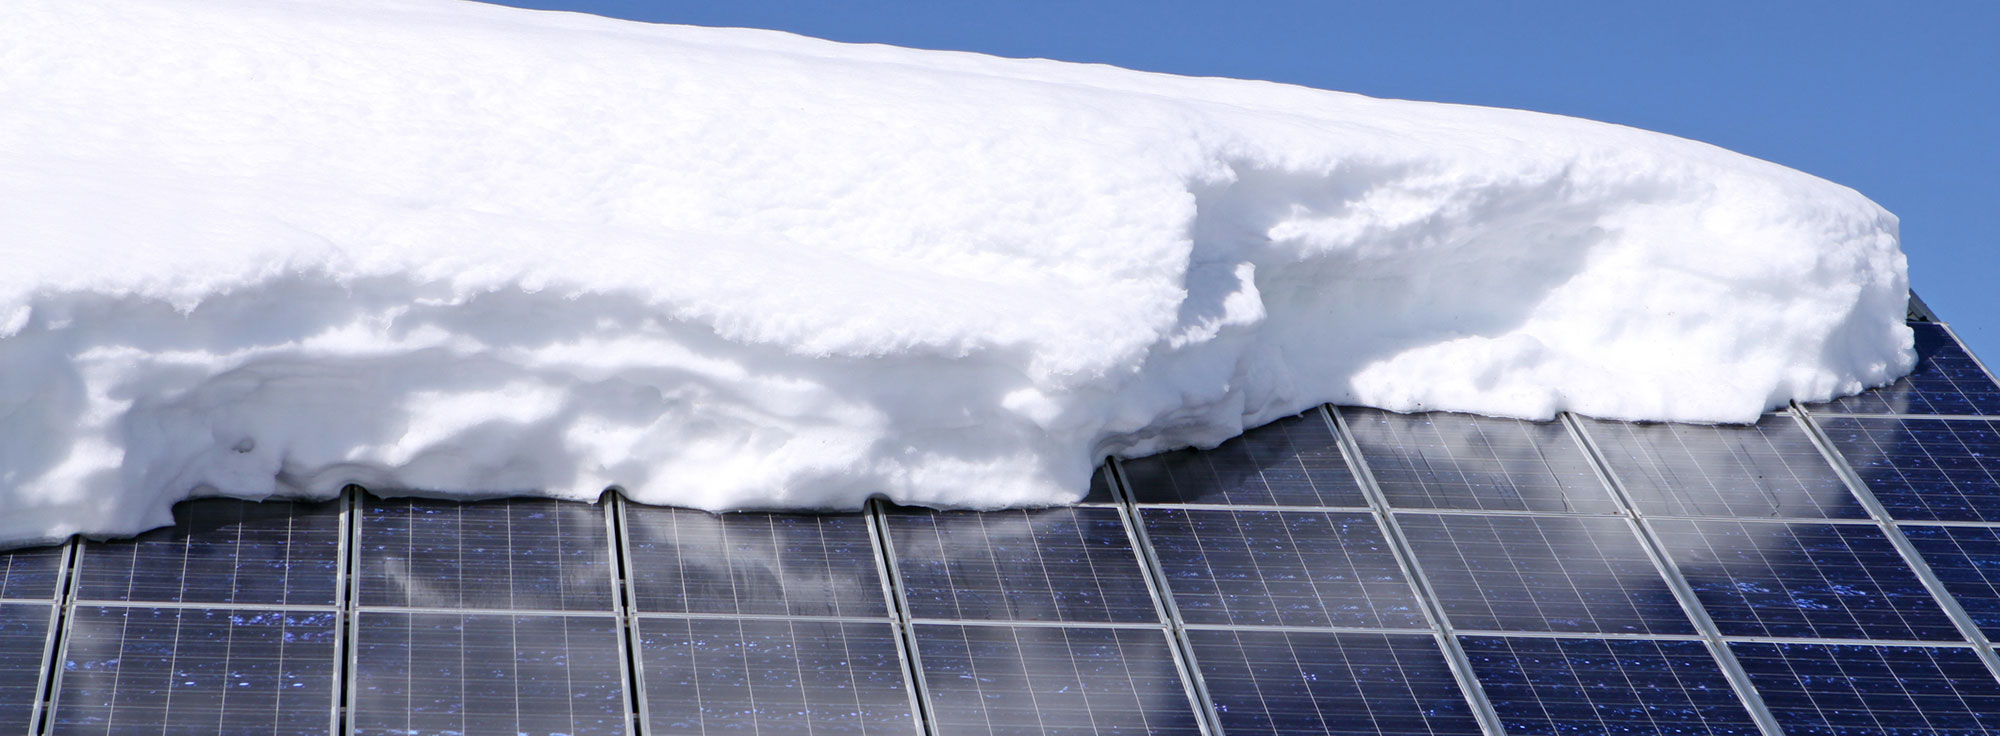 Snow on Solar Panel